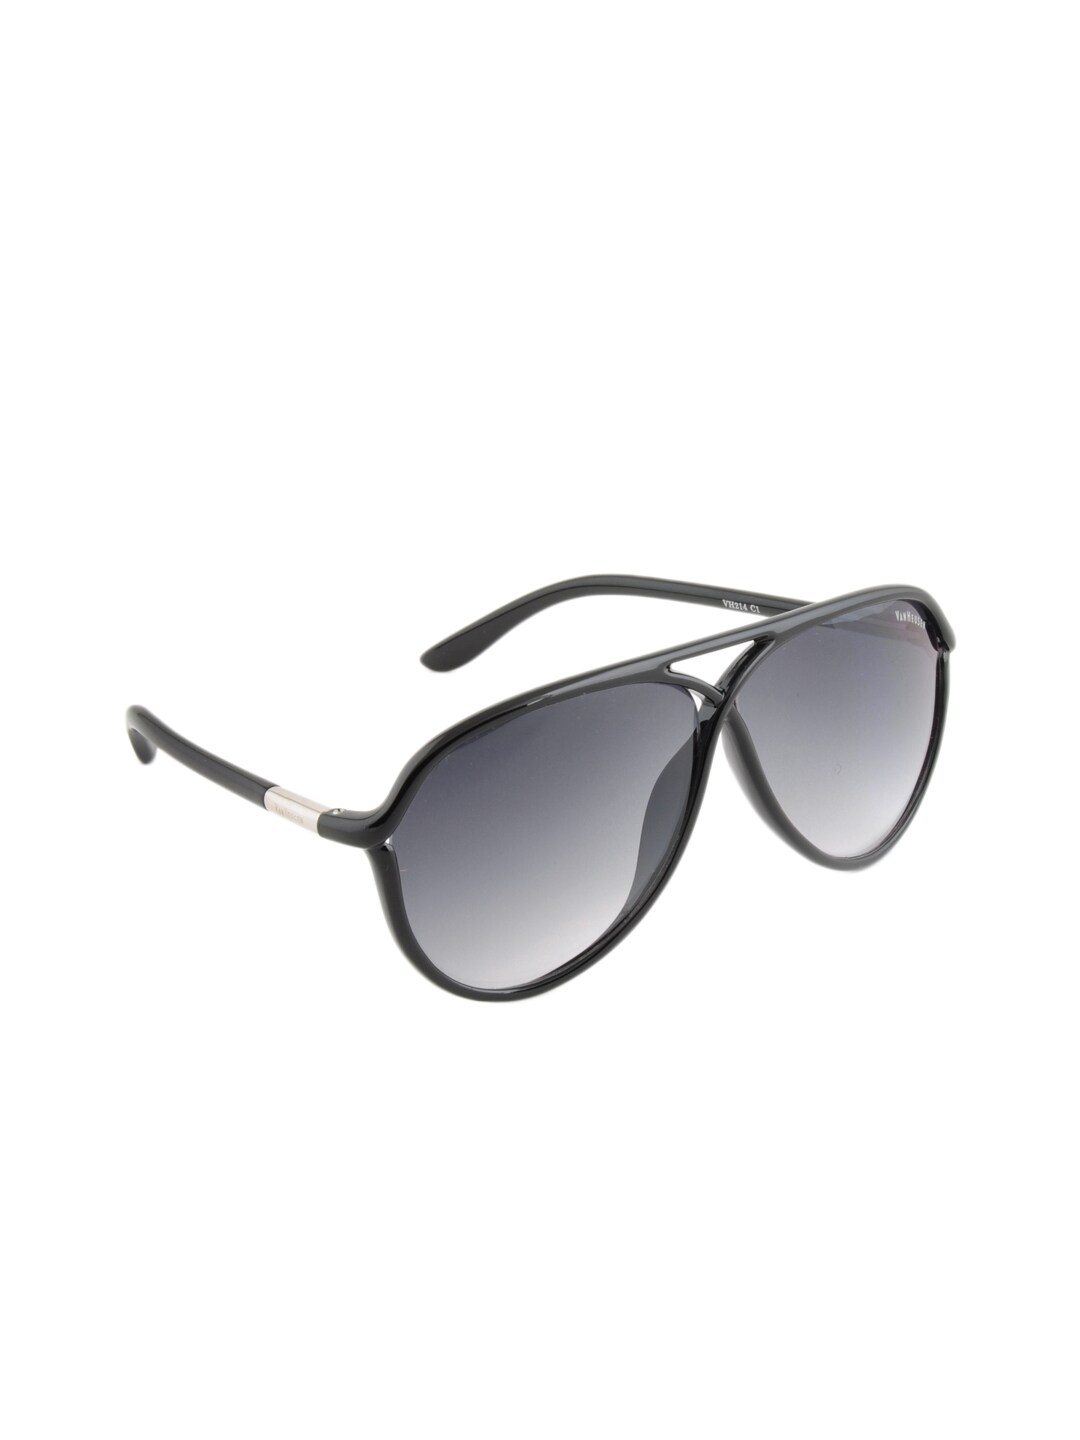 Van Heusen Unisex Sunglasses VH214-C1